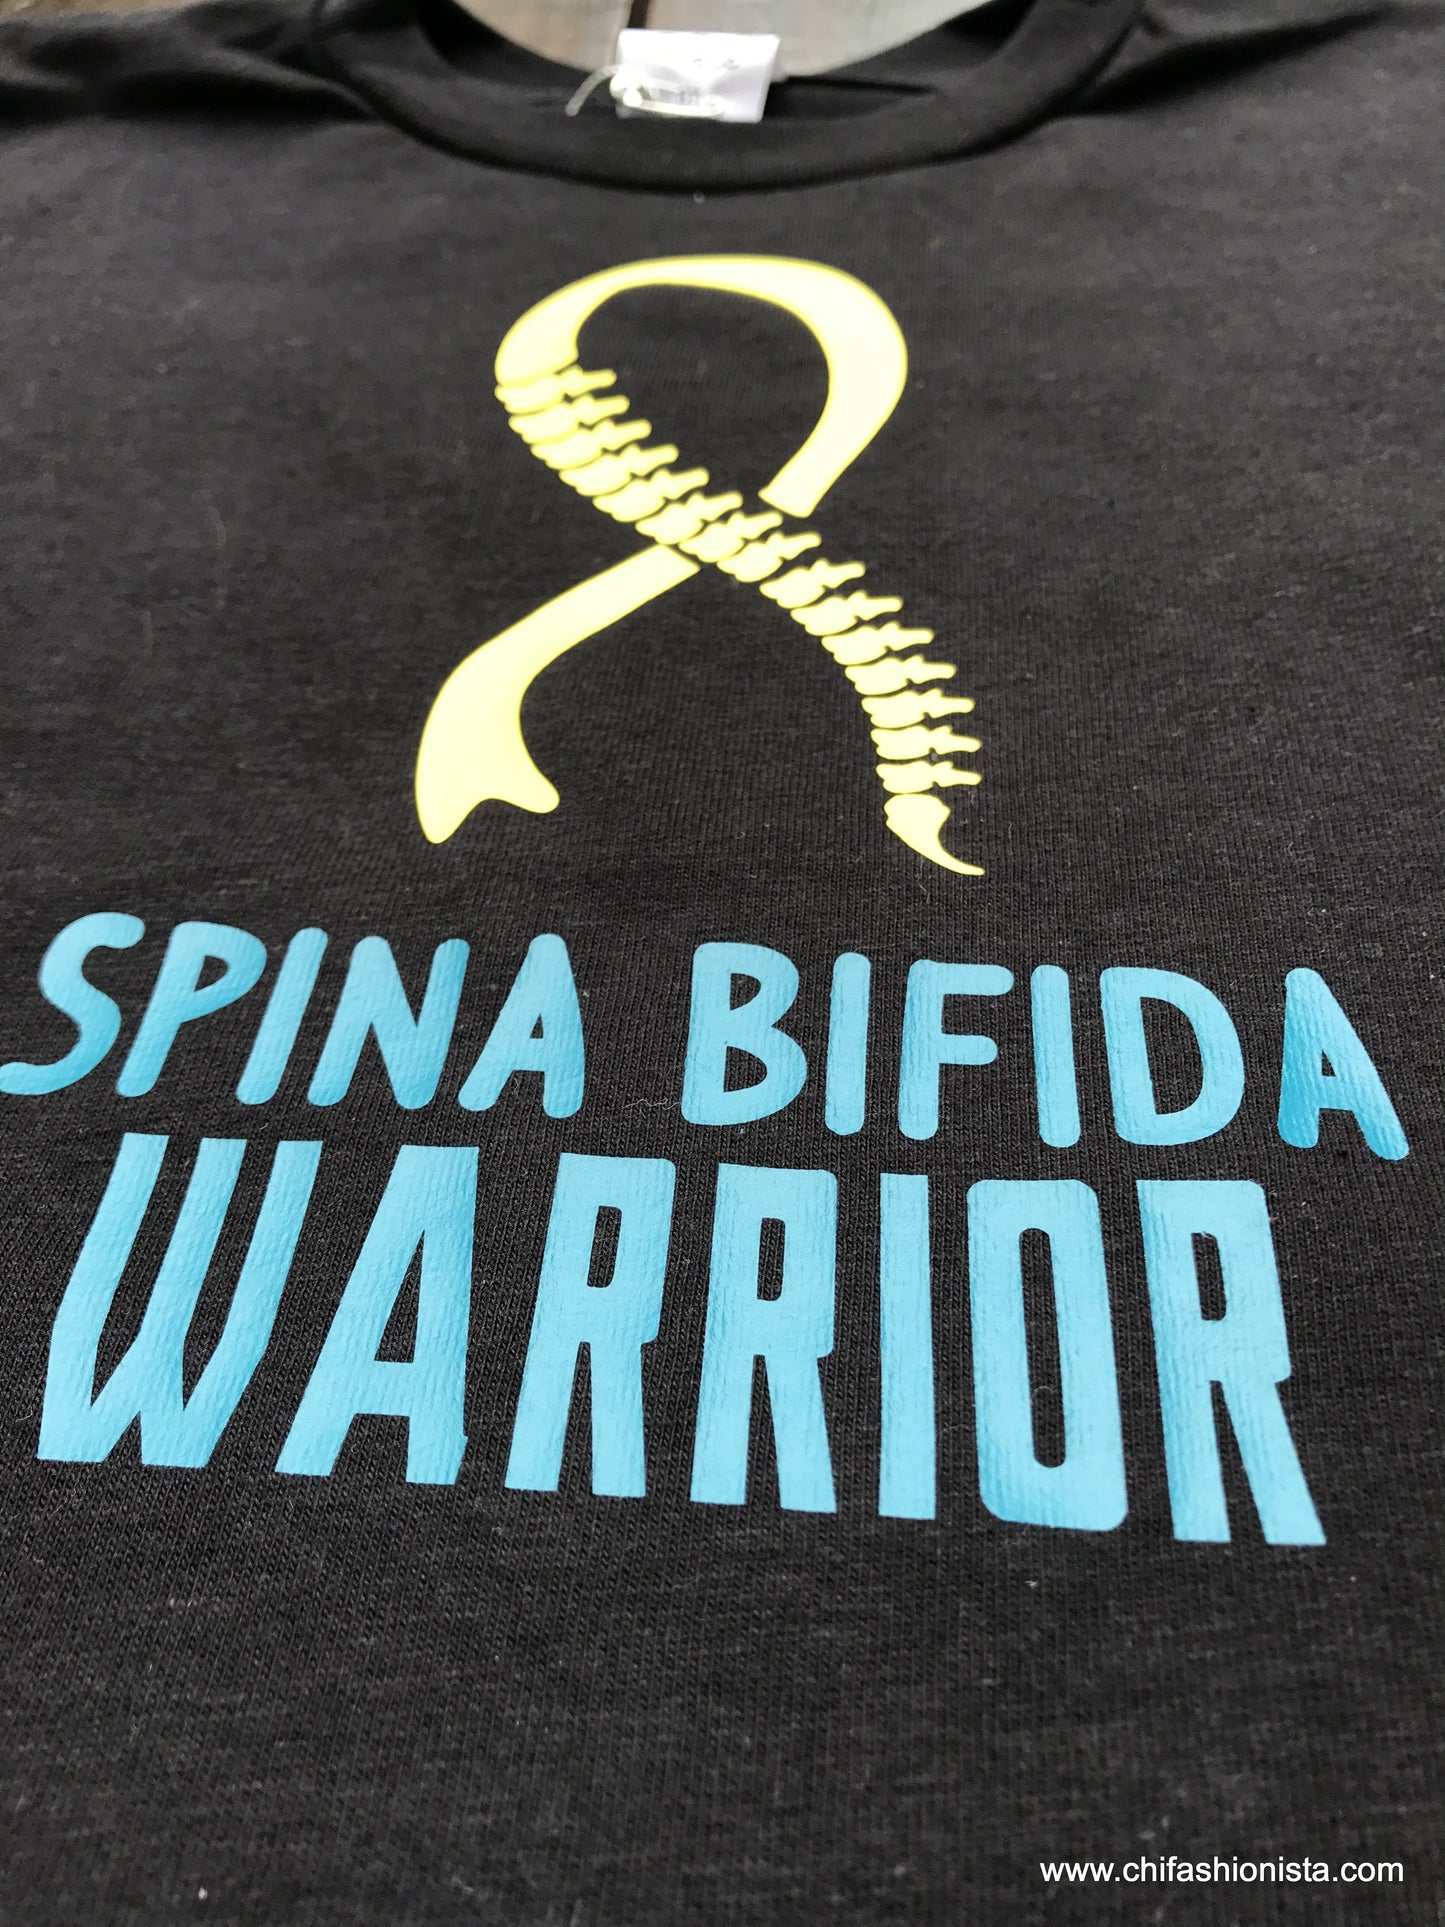 Spina Bifida Warrior